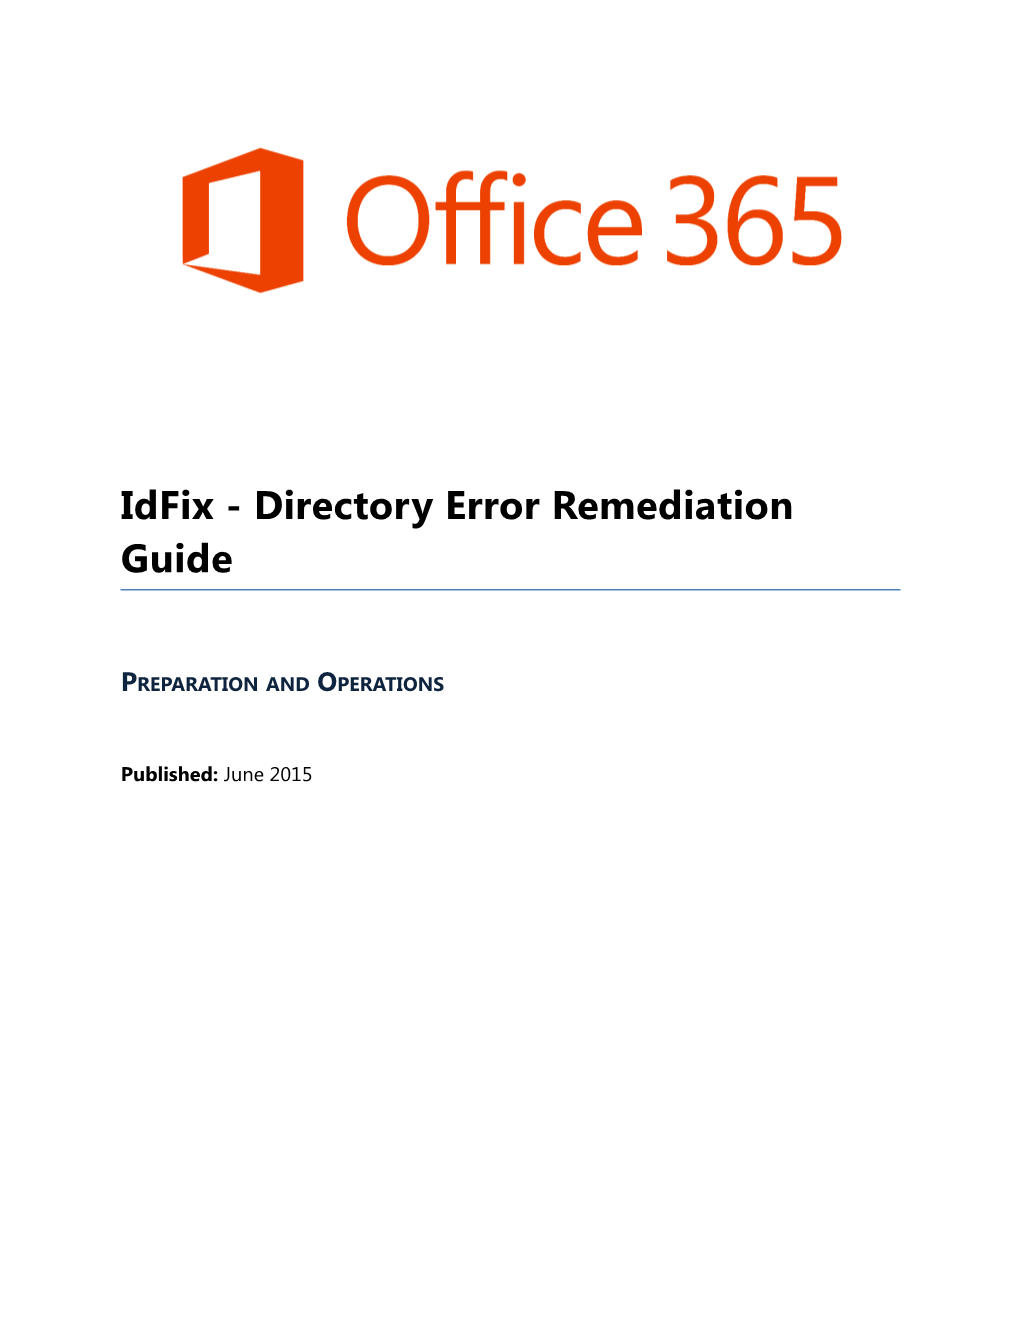 Idfix - Directory Error Remediation Guide